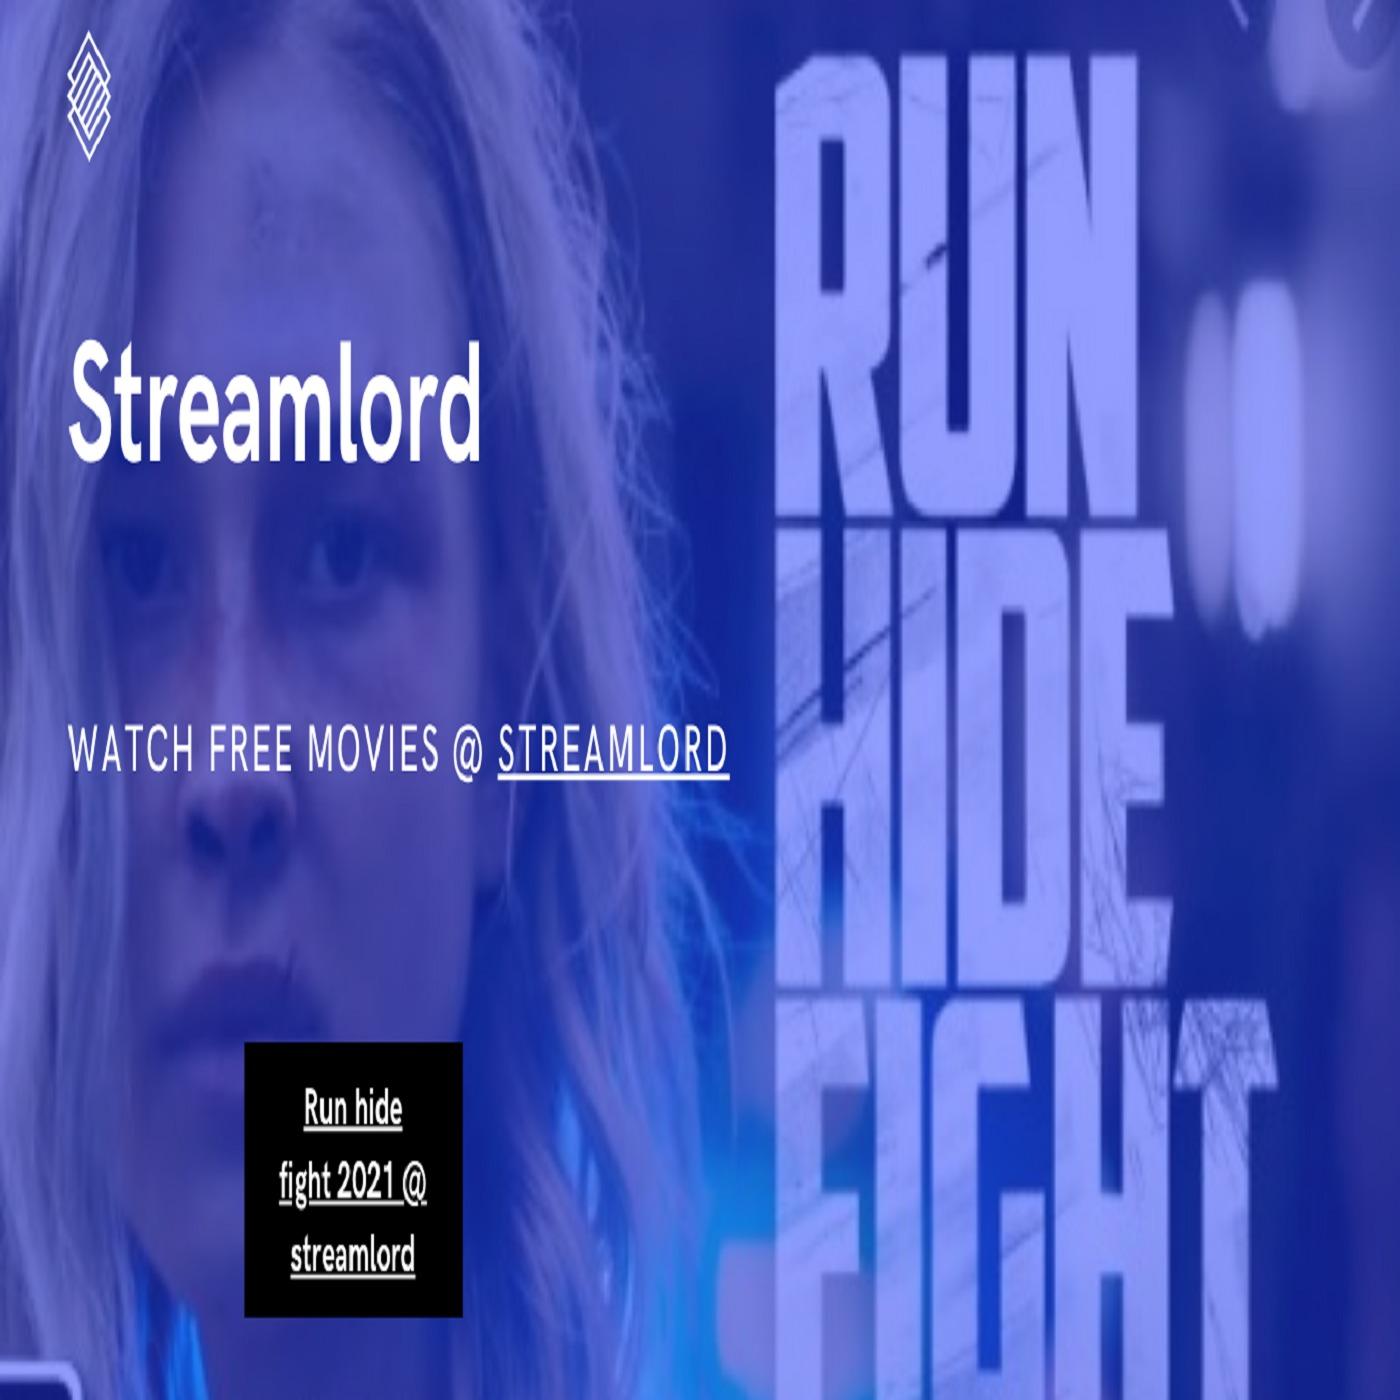 HD quality stream length movie run hide fight 2021 streamlord